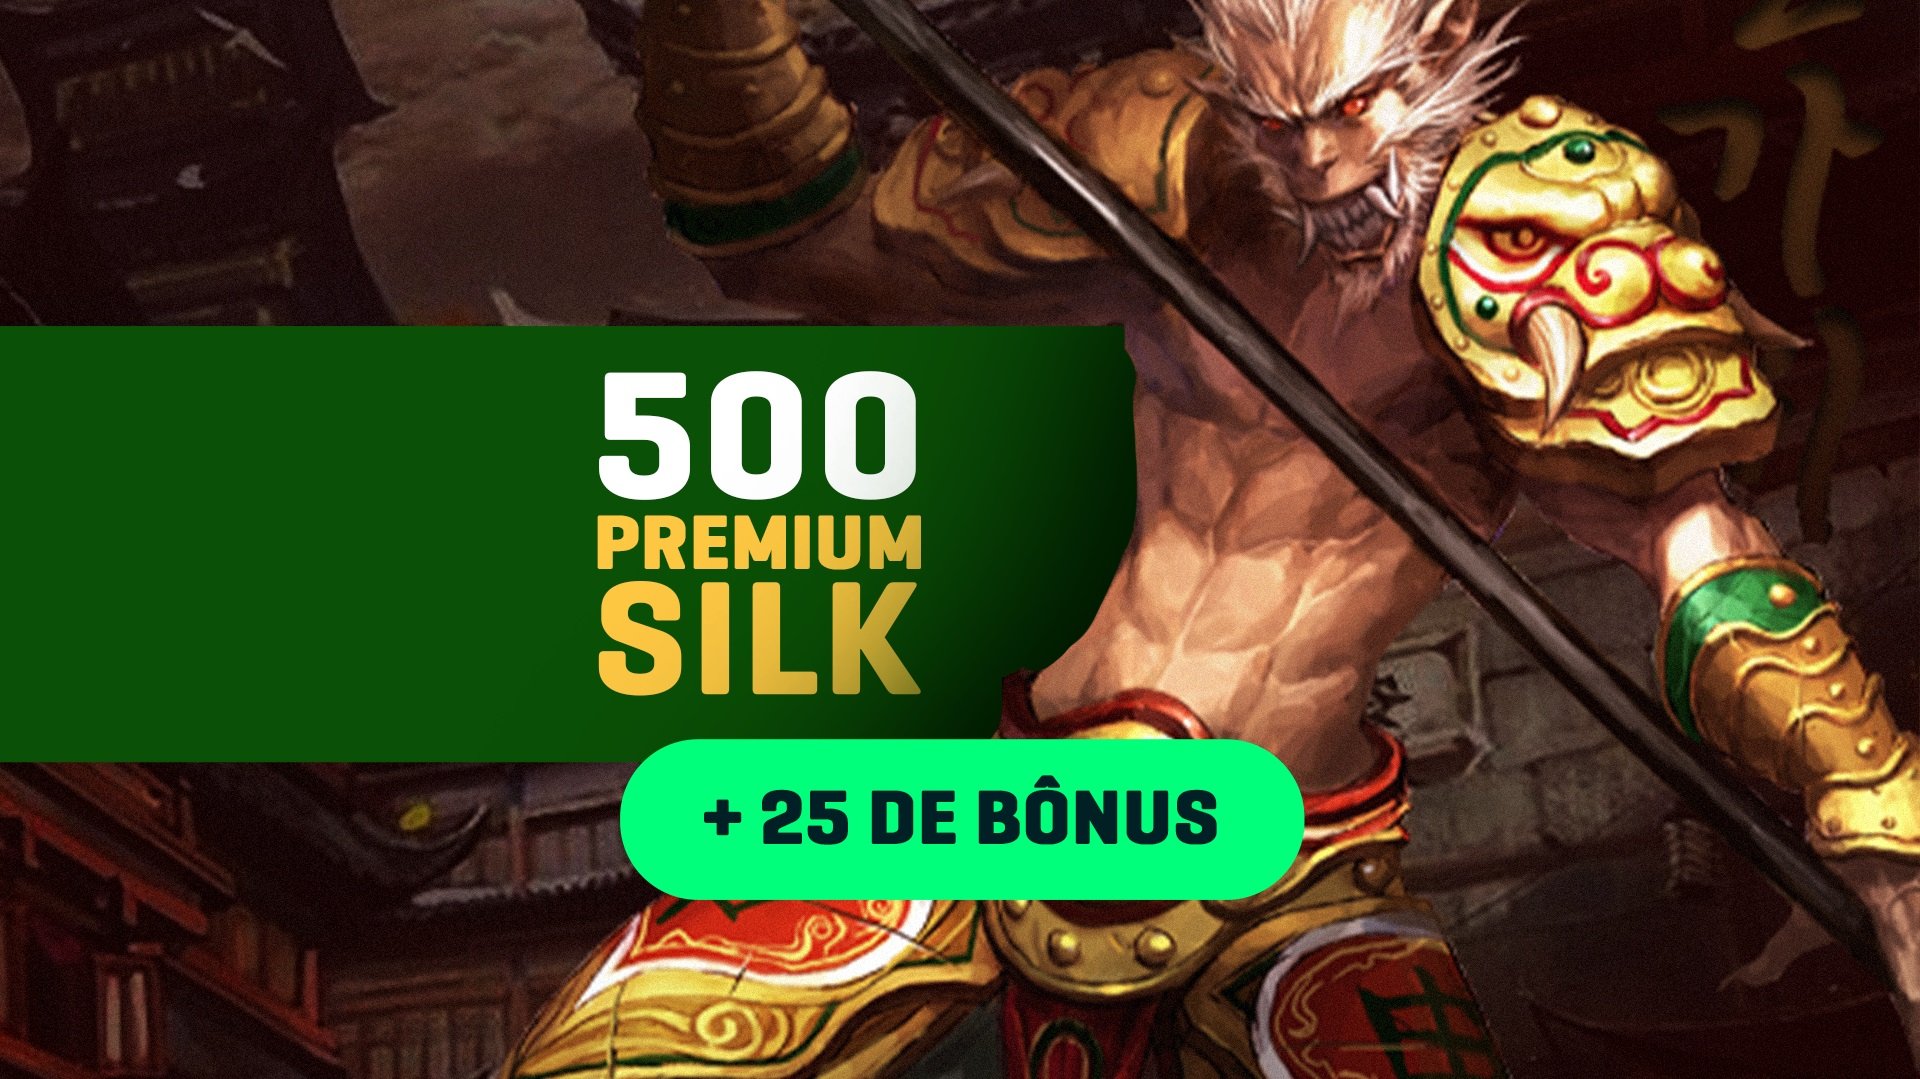 Silkroad – Pacote de 500 PREMIUM SILK + Bônus de 25 PREMIUM SILK cover